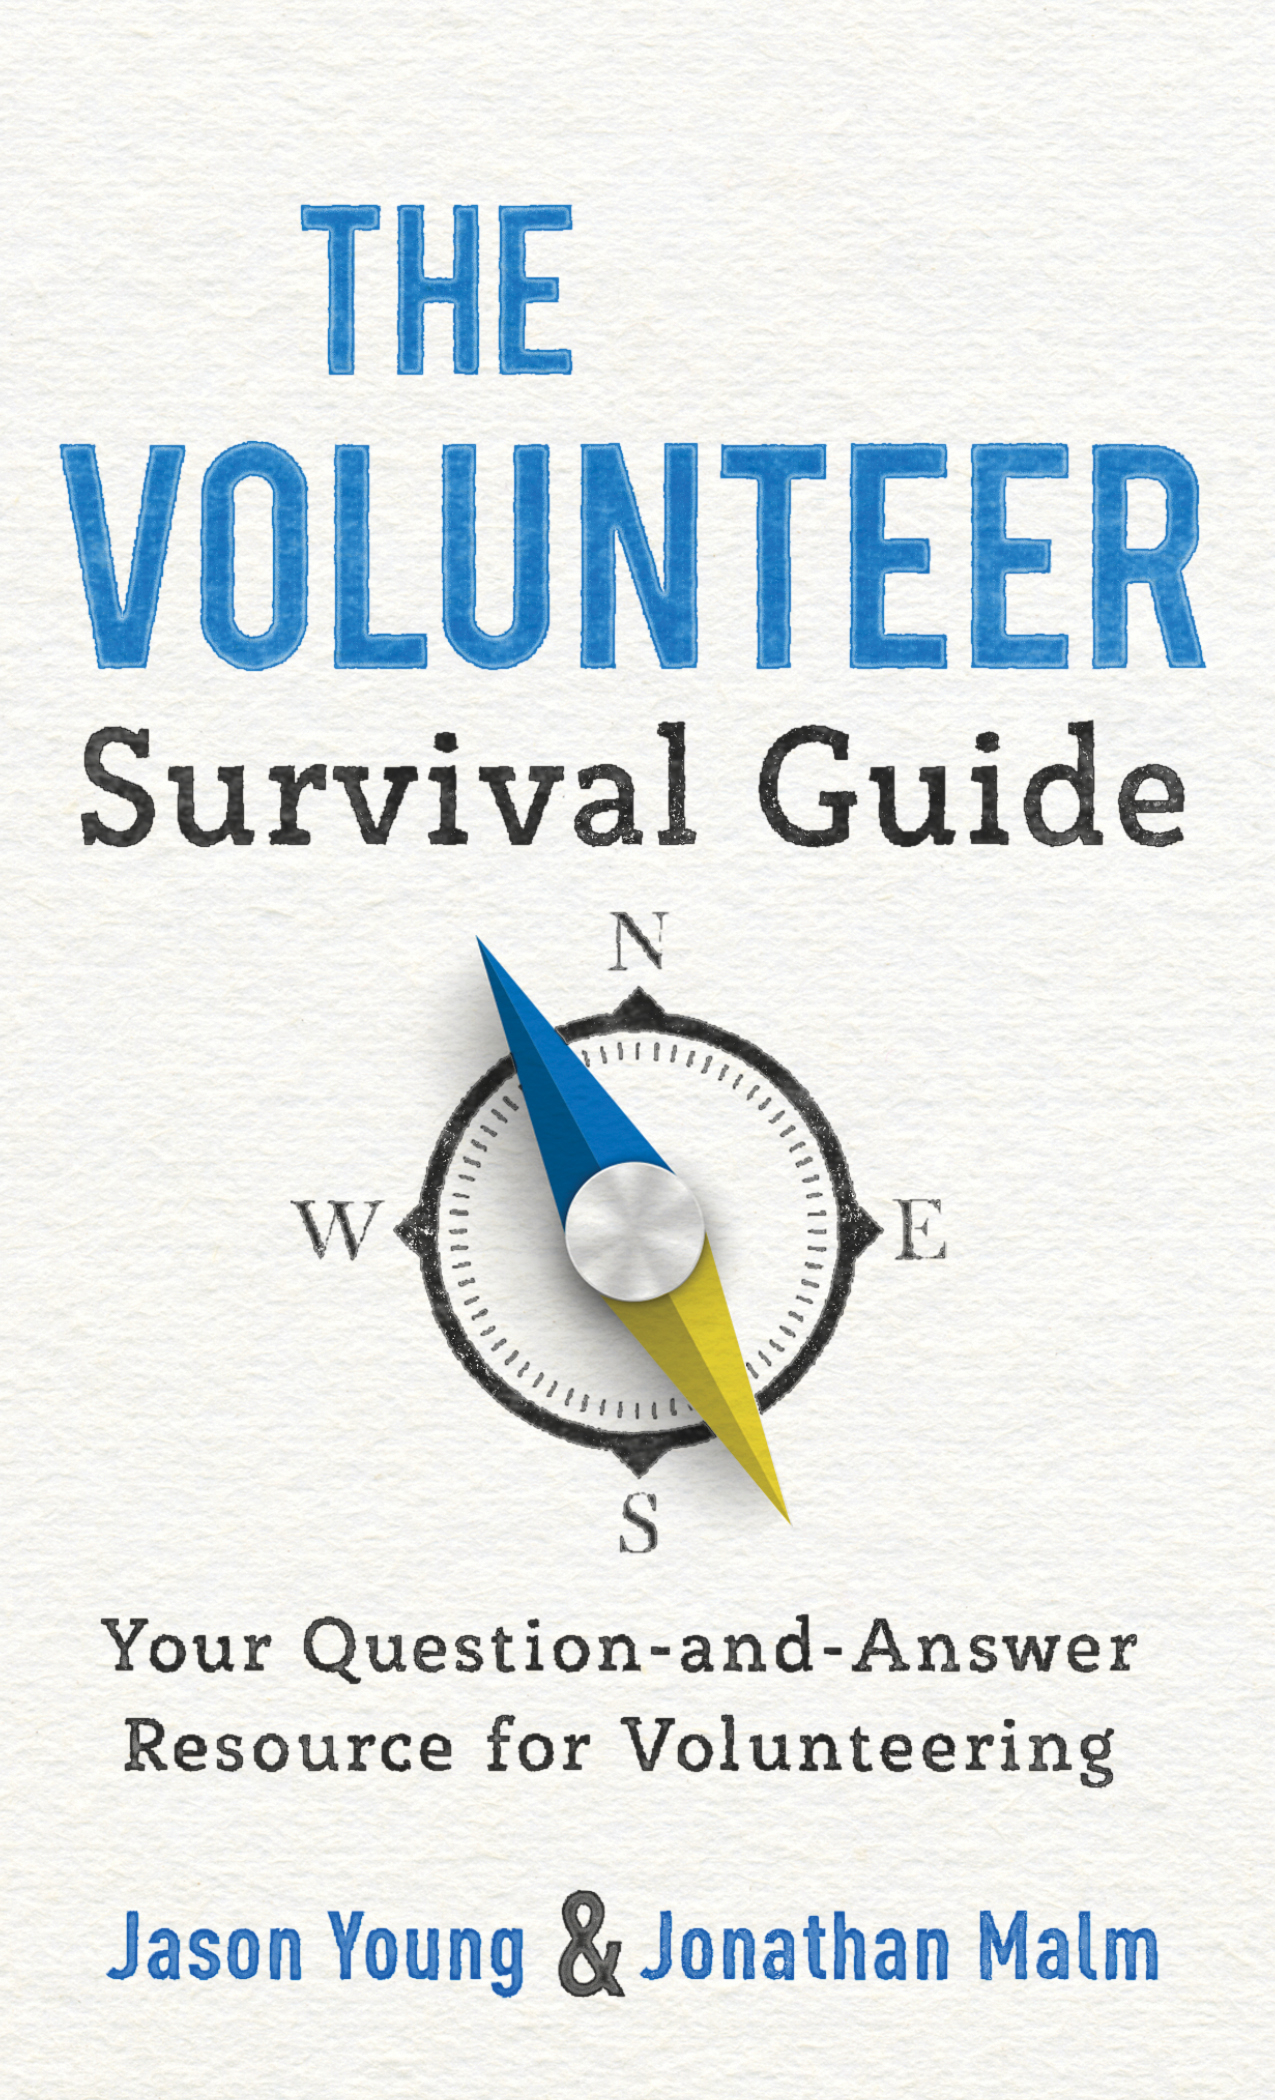 The Volunteer Survival Guide